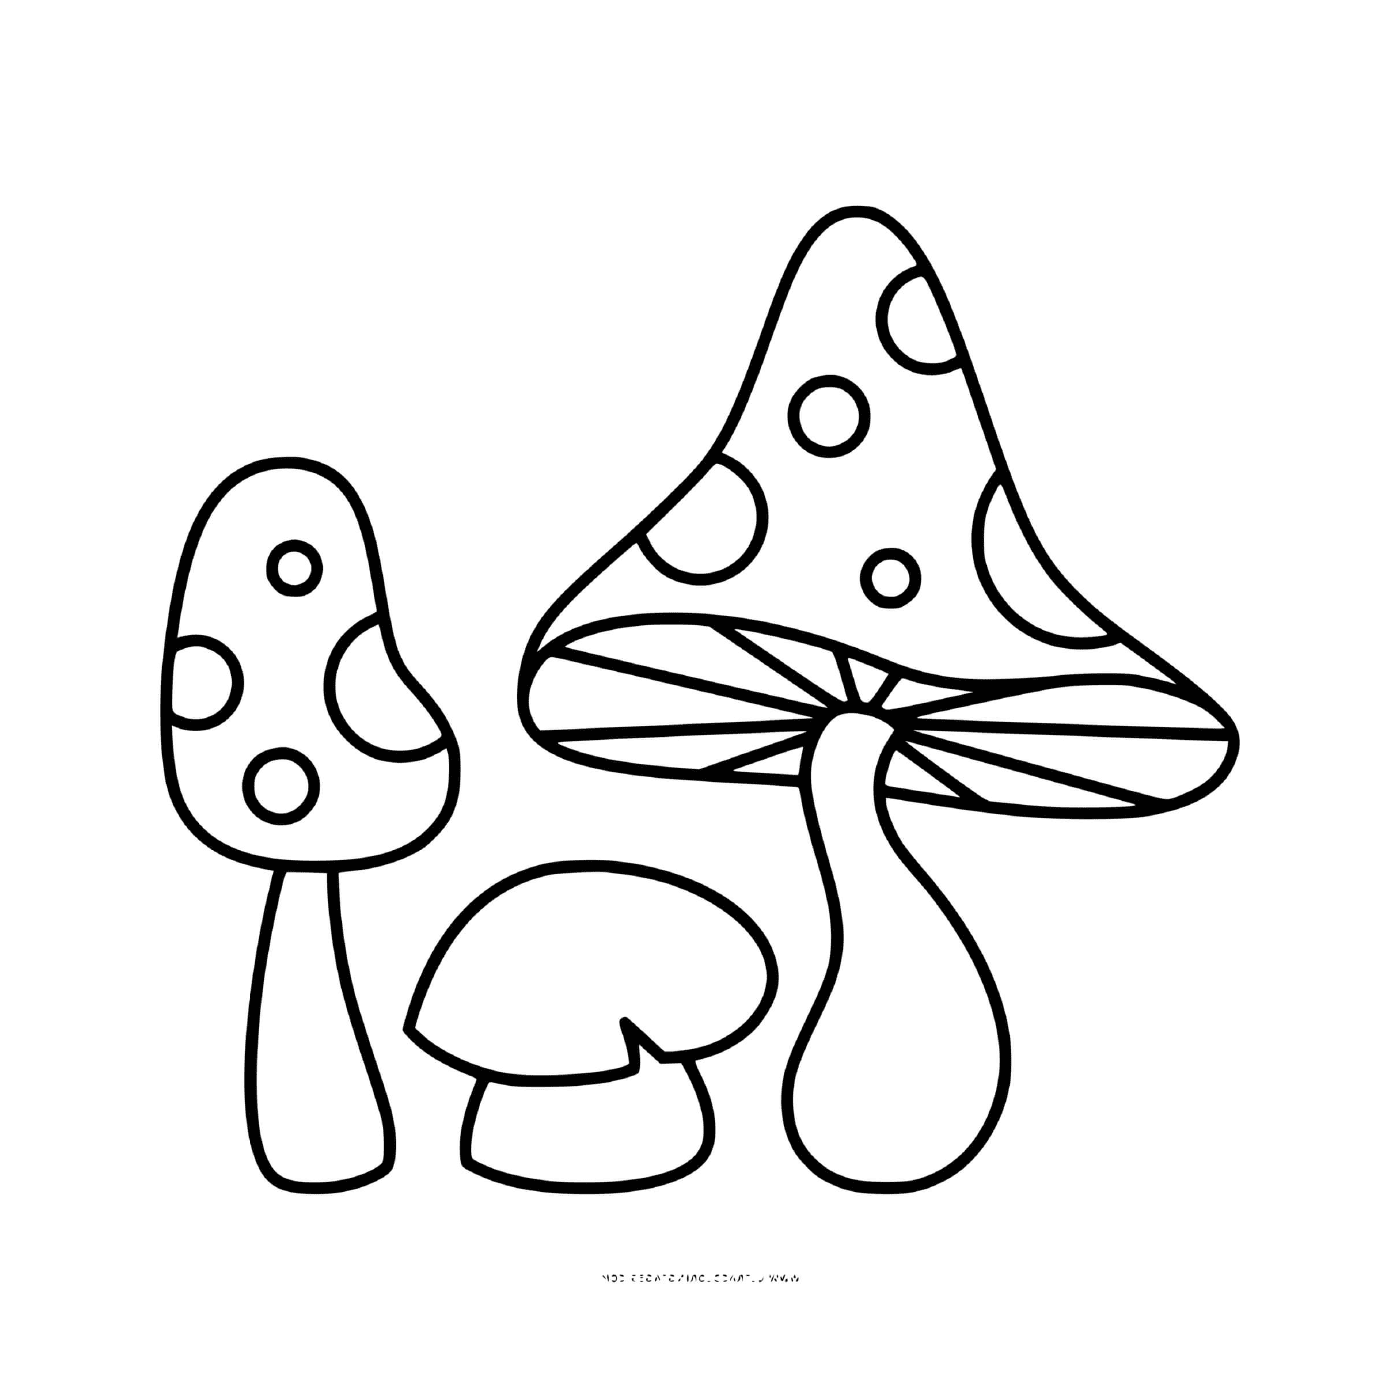   Divers champignons amanite jonquille et phalloide 